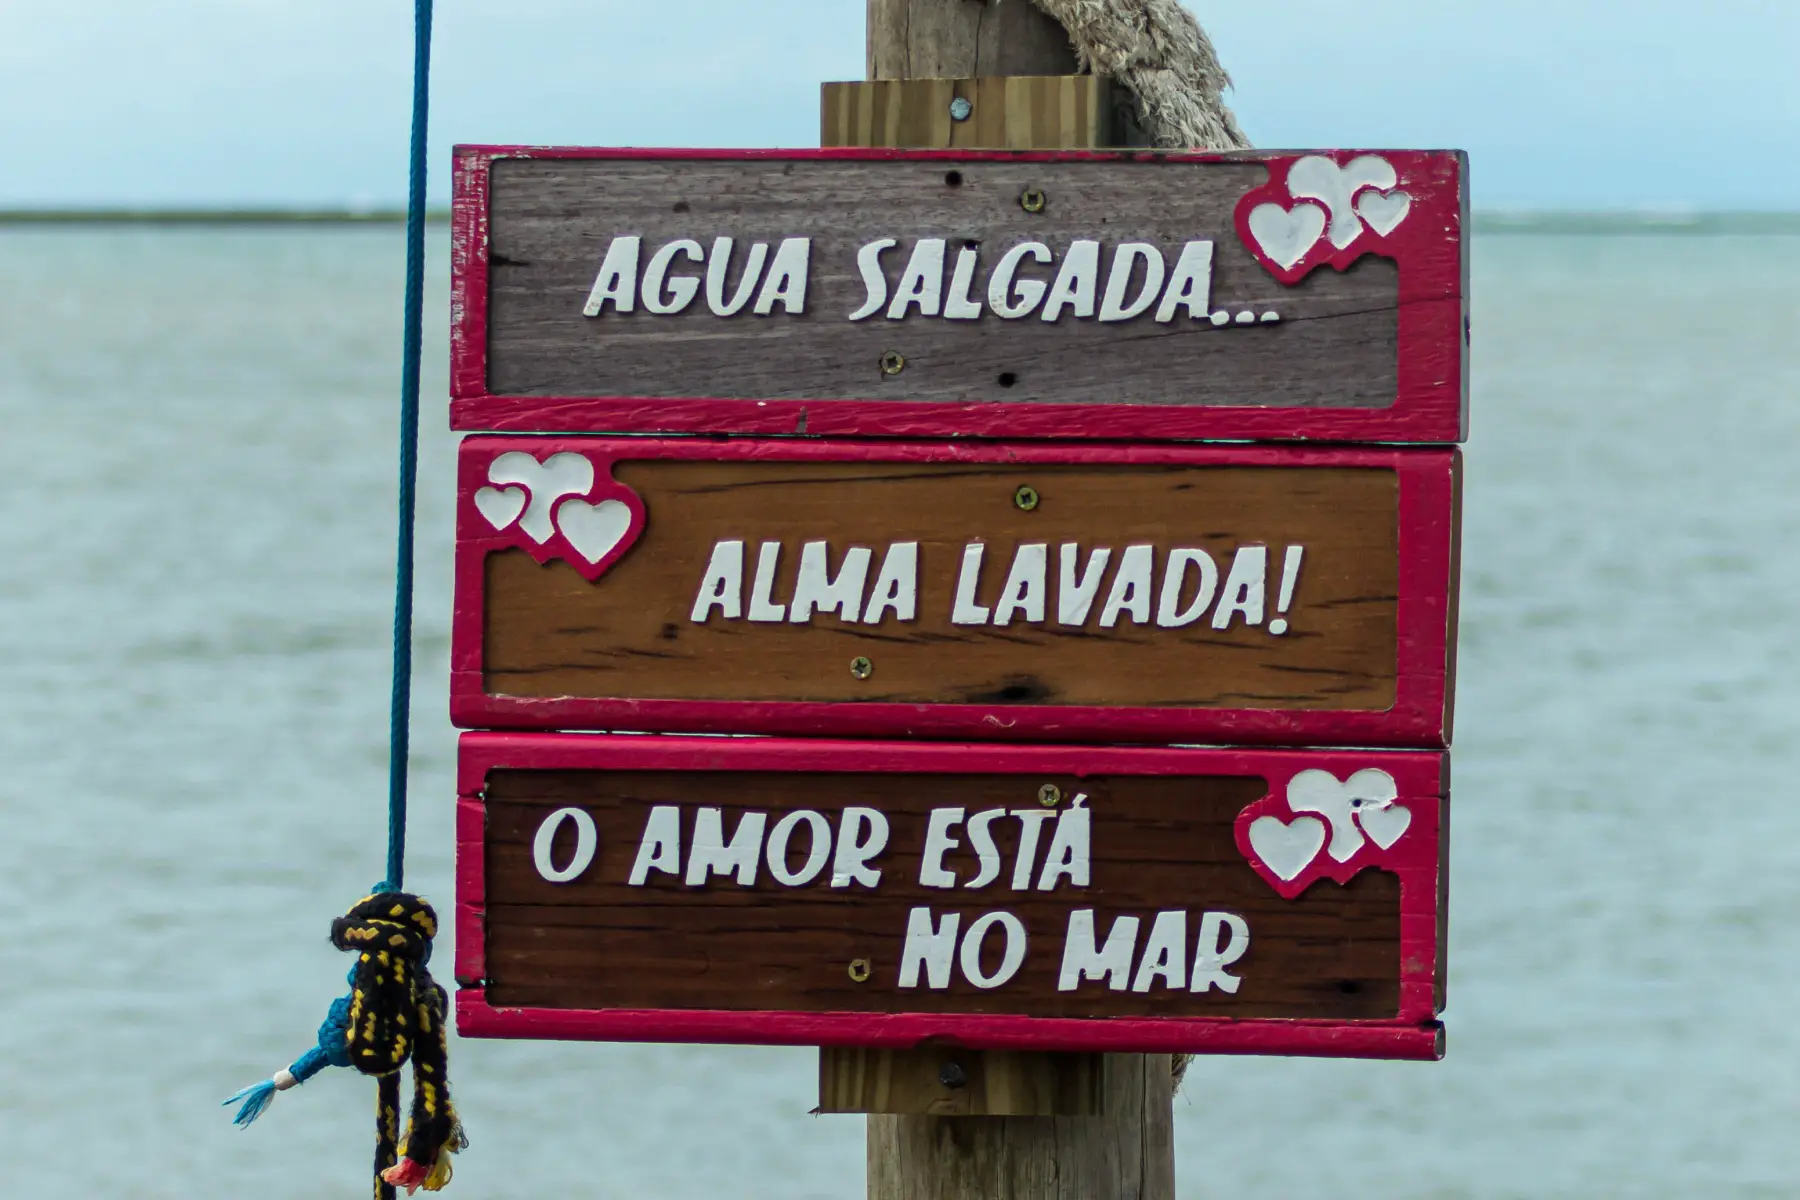 A close-up photo of a playful sign on a beach in Brazil written in Brazilian Portuguese